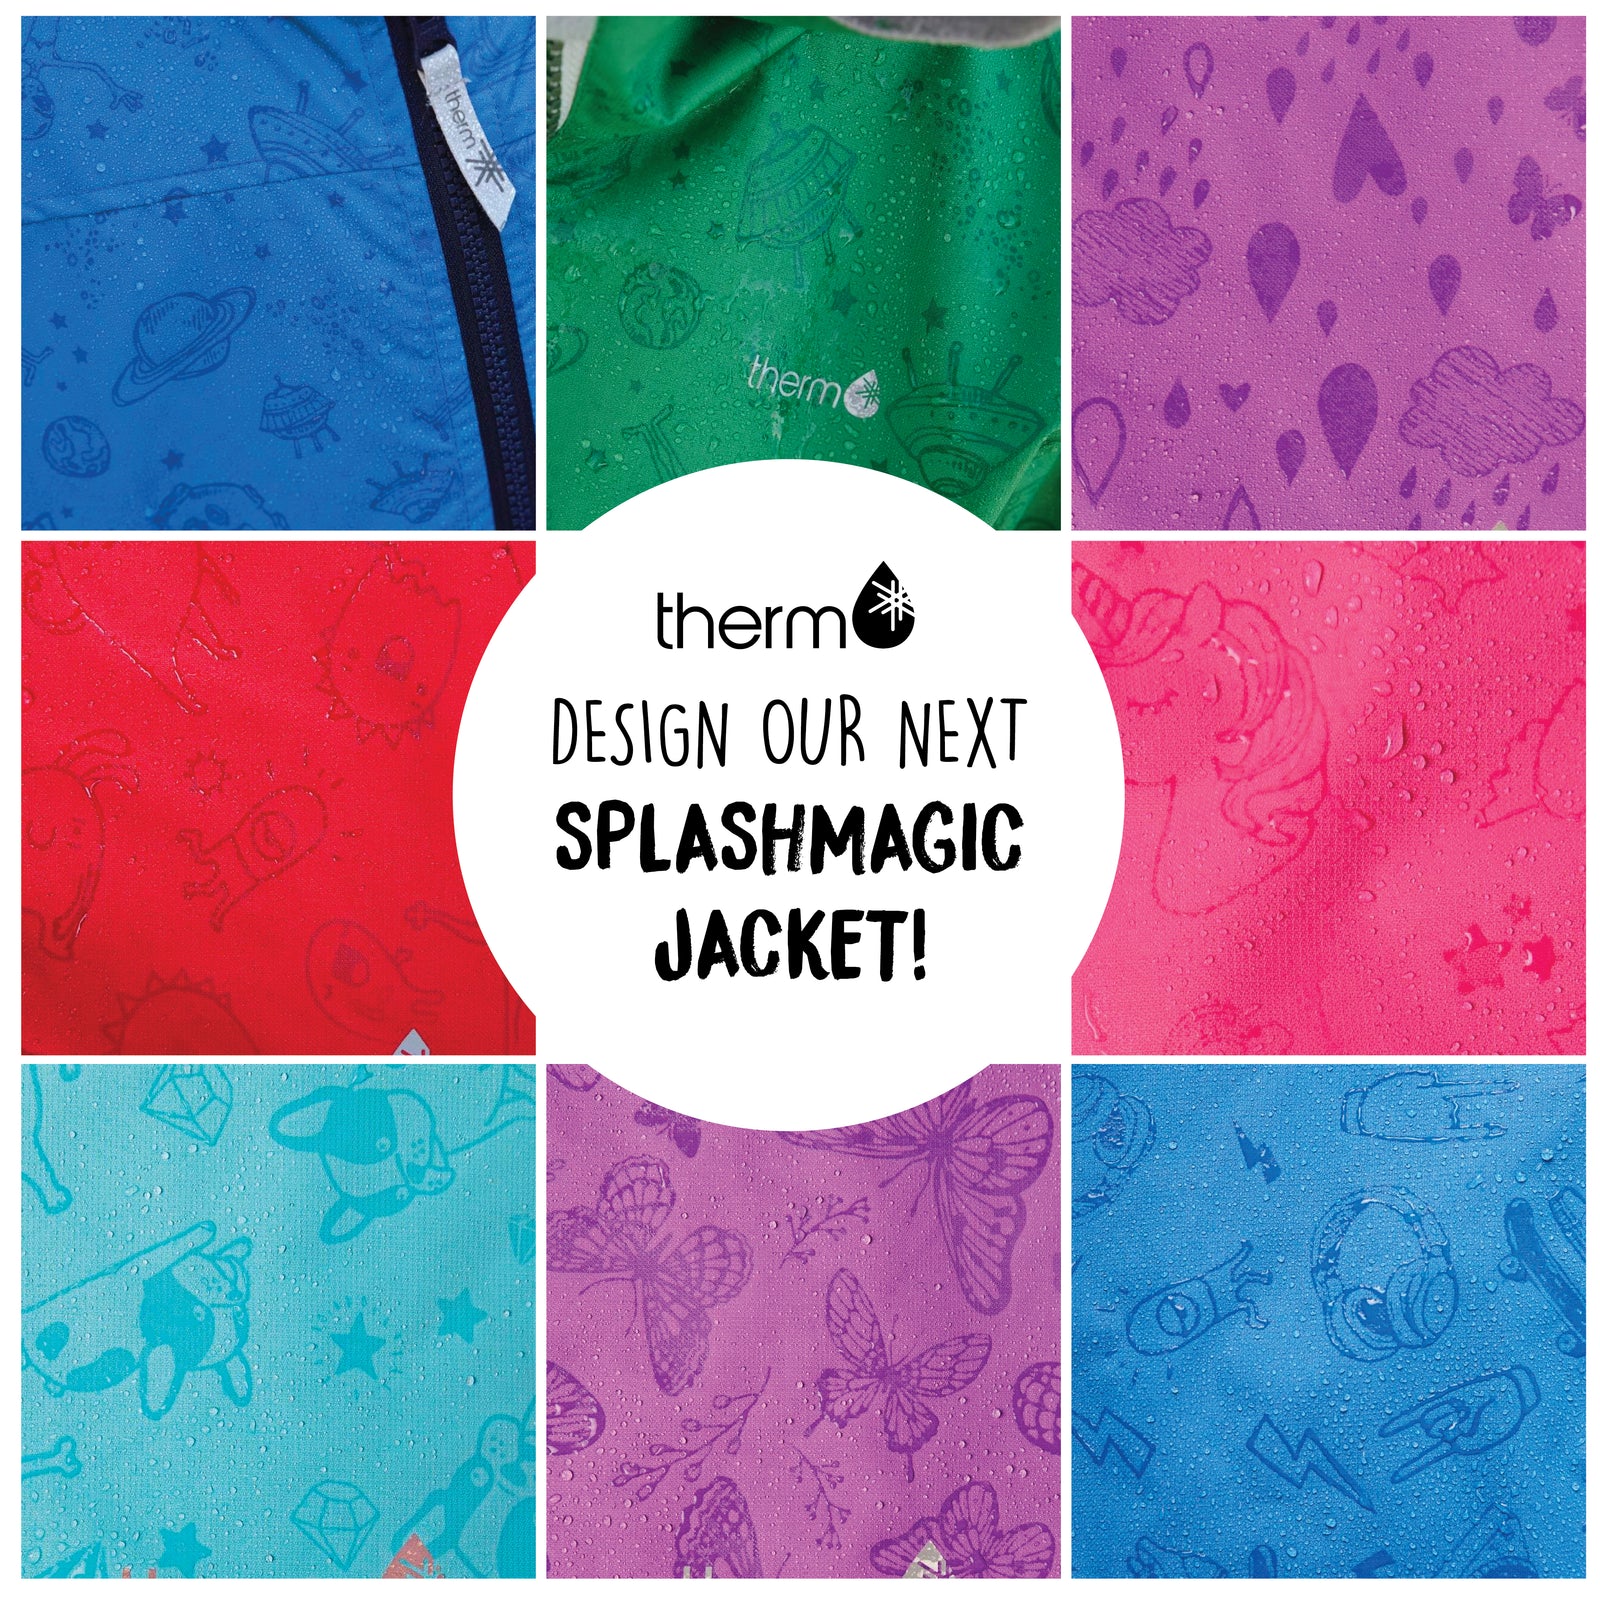 Help us design our next SplashMagic Jacket and WIN!